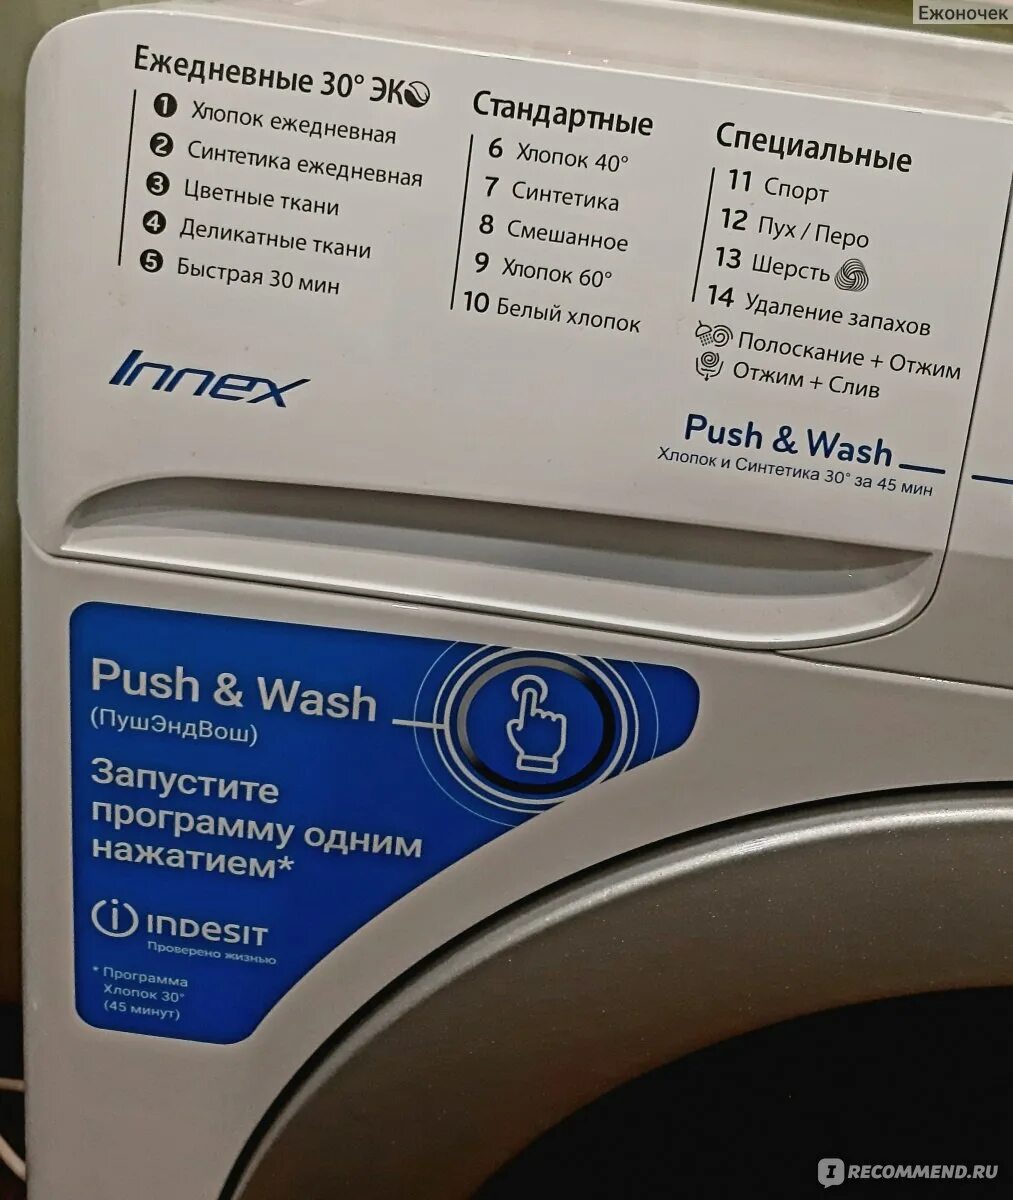 Программа wash. Стиральная машина Innex Push and Wash. Стиральная машина Индезит Innex 6кг.